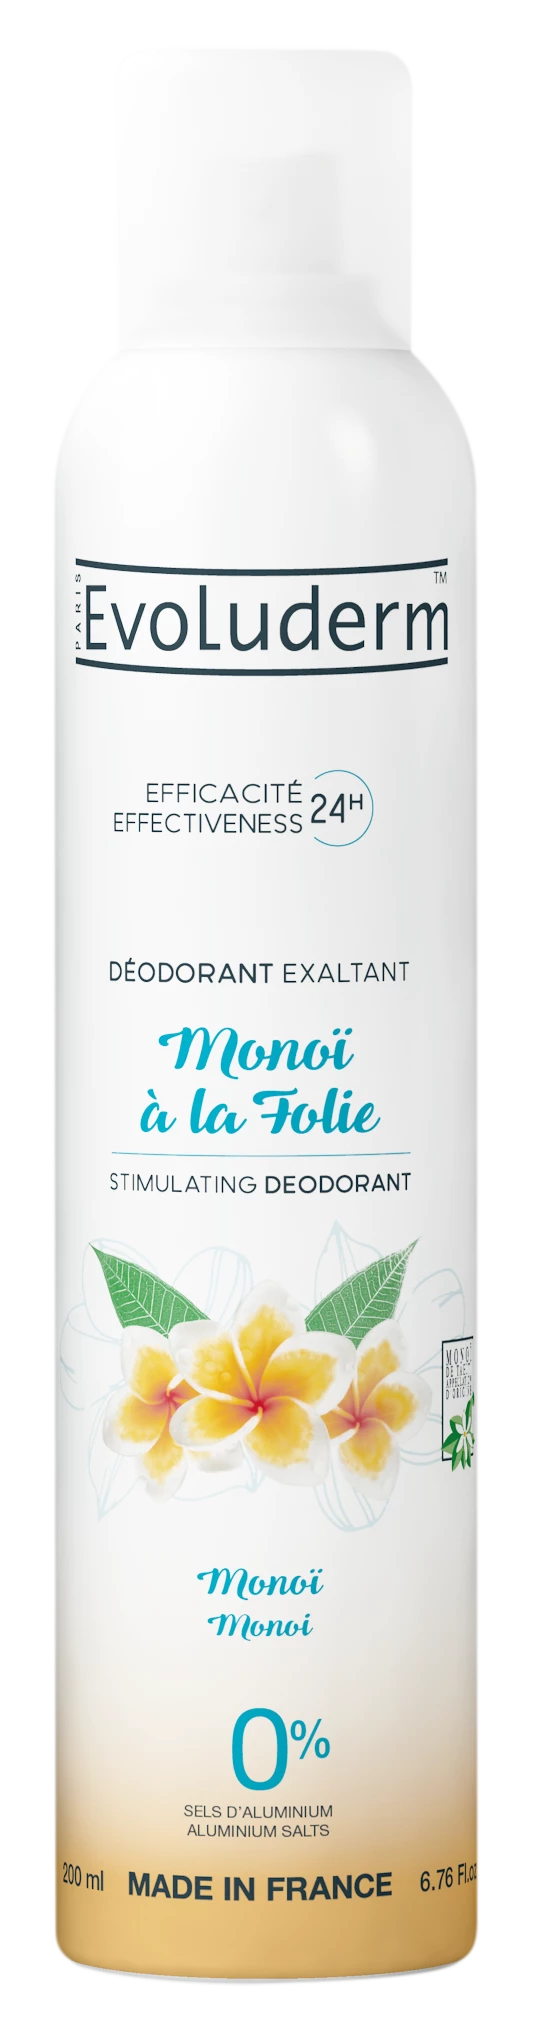 Monoi deodorant à la Folie Monoï, 200ml - EVOLUDERM